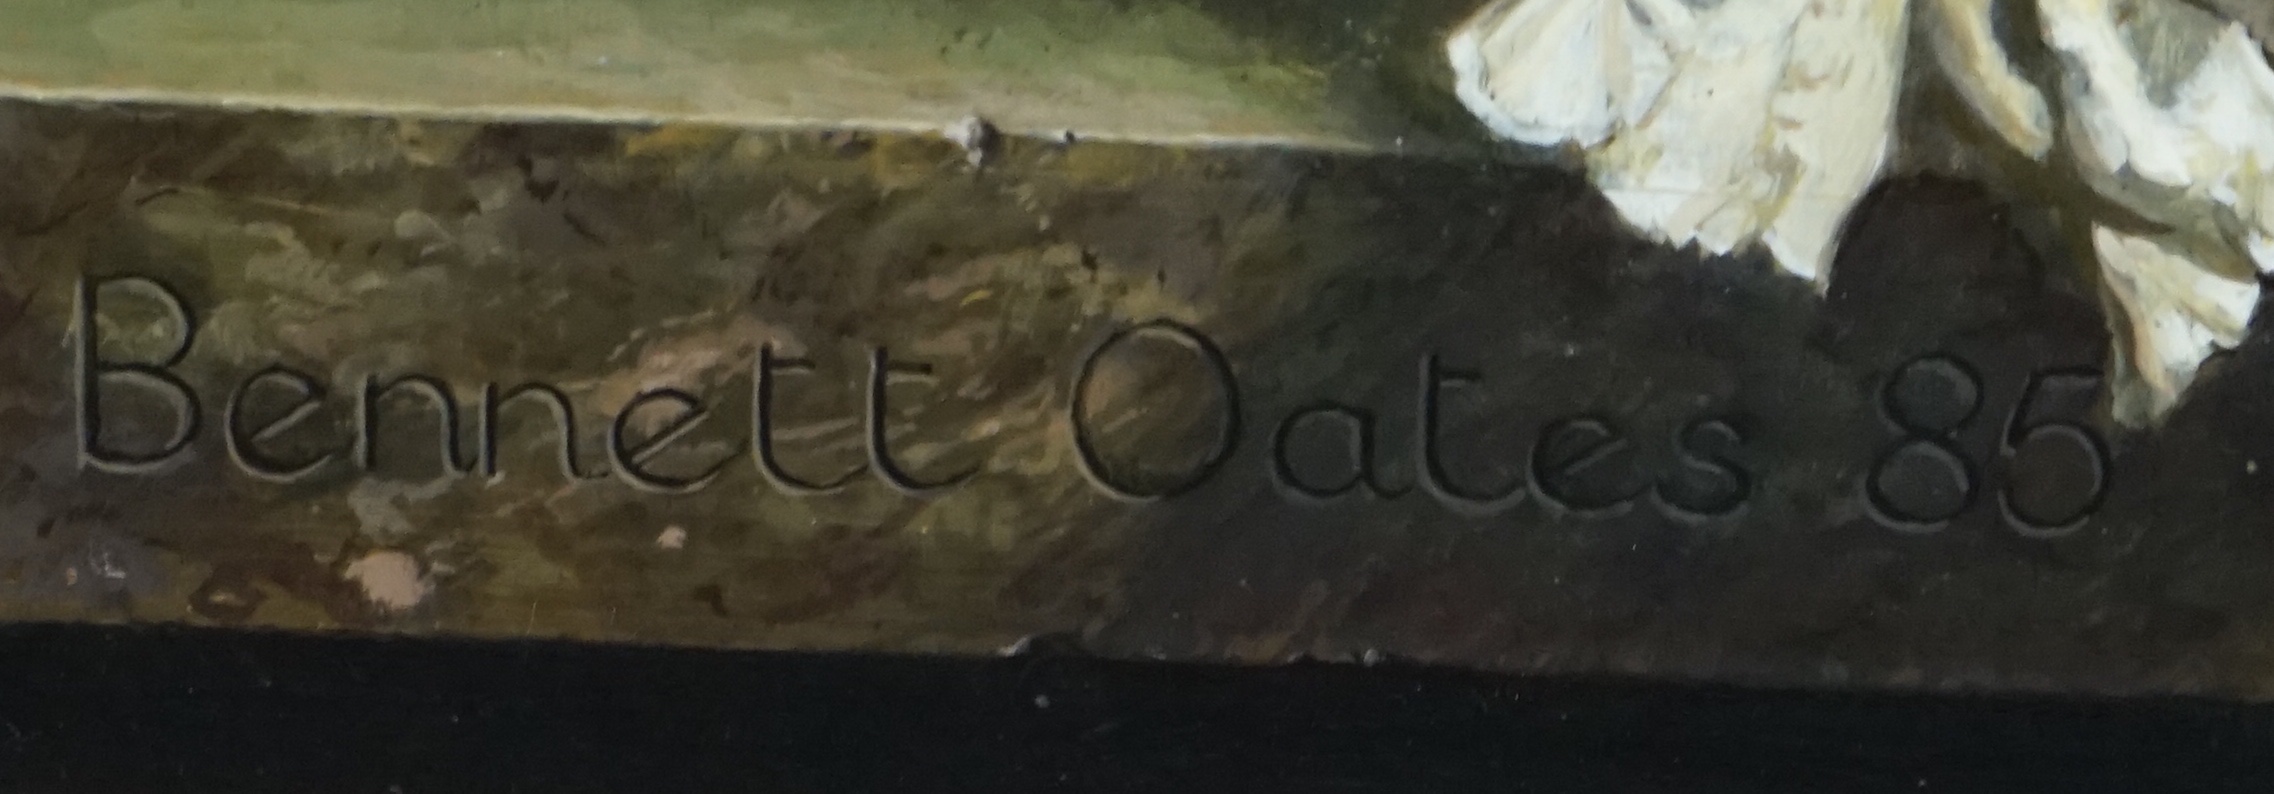 Bennett Oates (1928-2009), 'Hollyhocks No.1', oil on board, 60 x 50cm